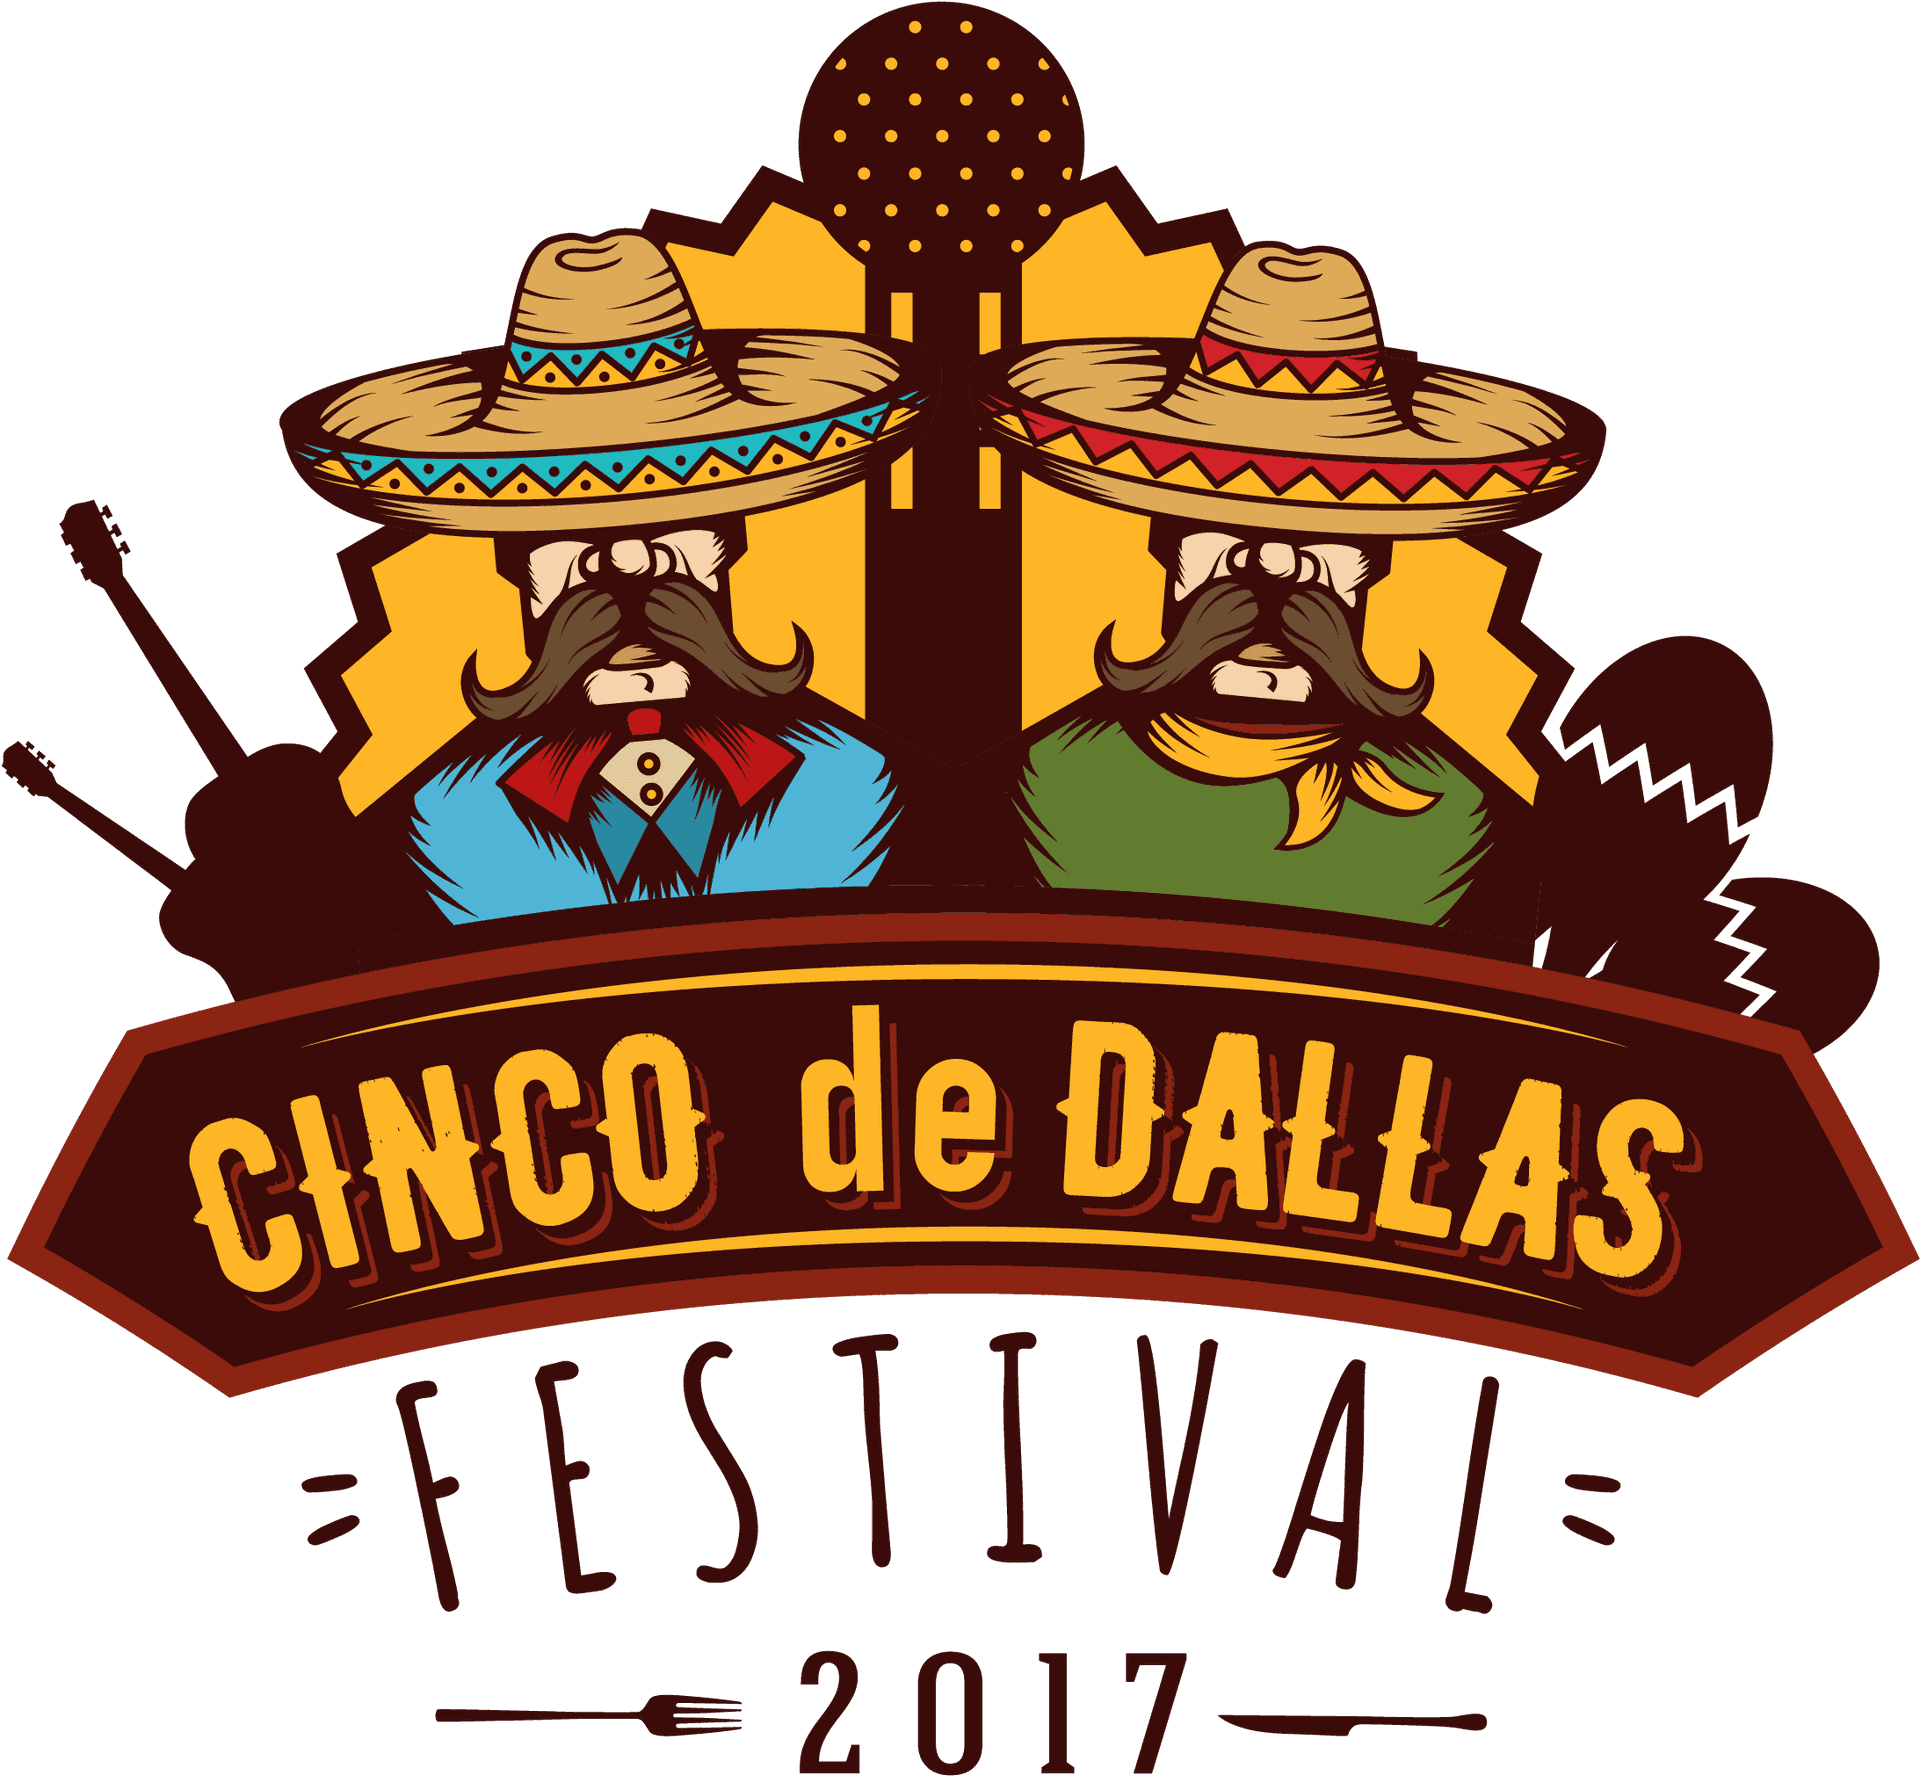 Cincode Dallas Festival2017 Logo PNG image